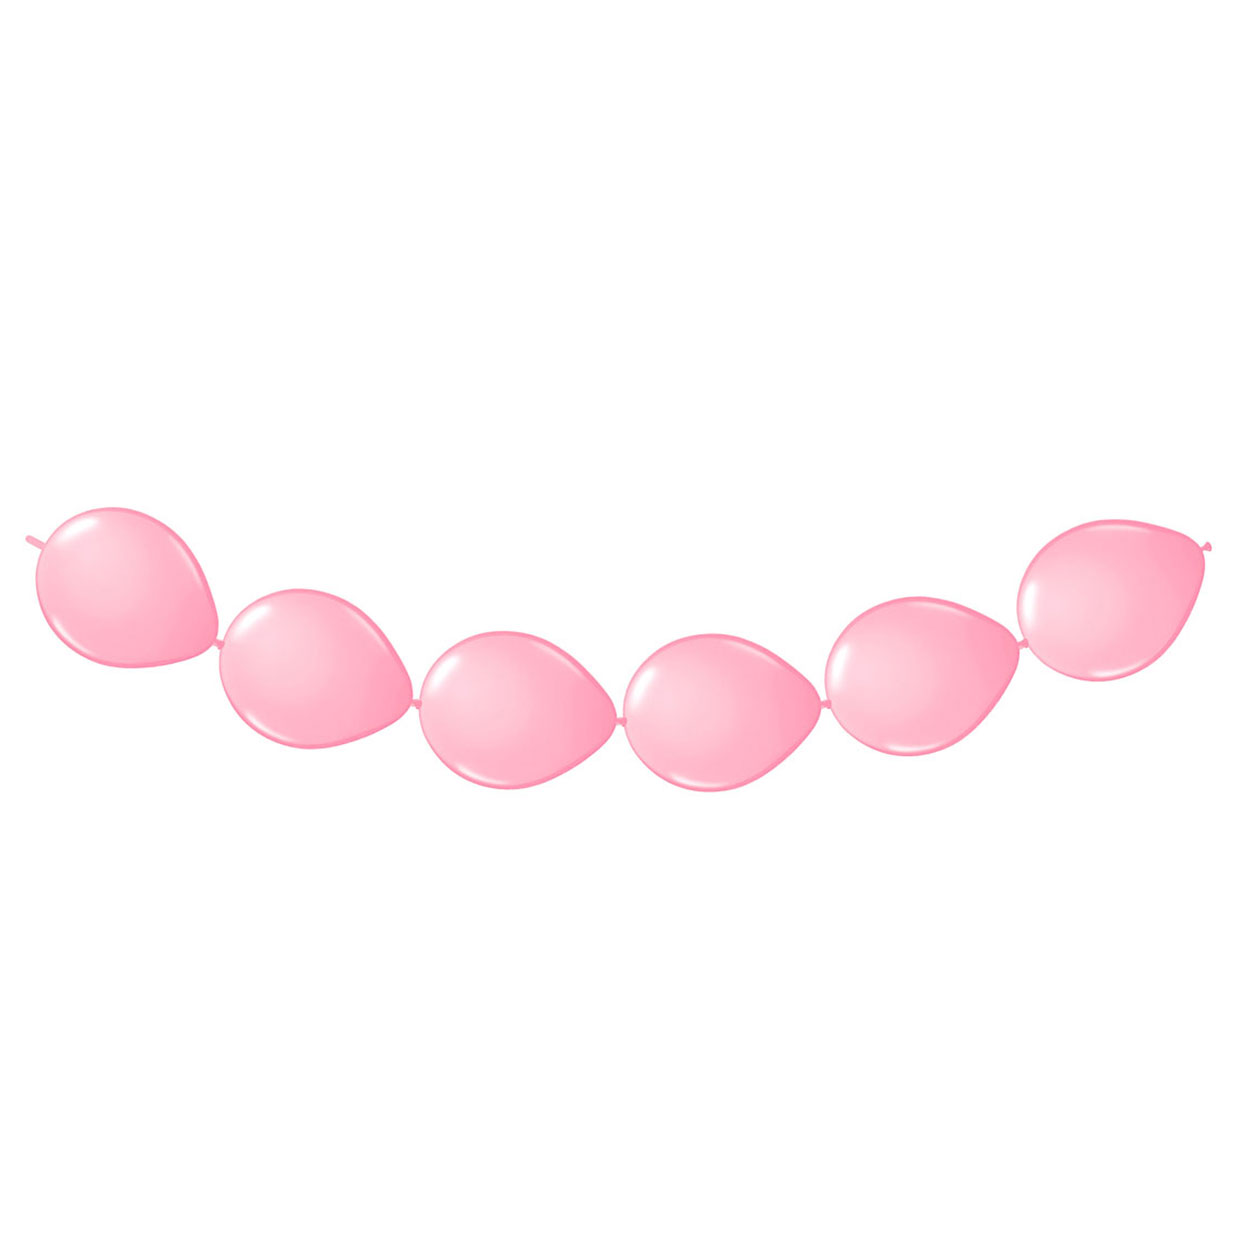 Roze Knoopballonnen